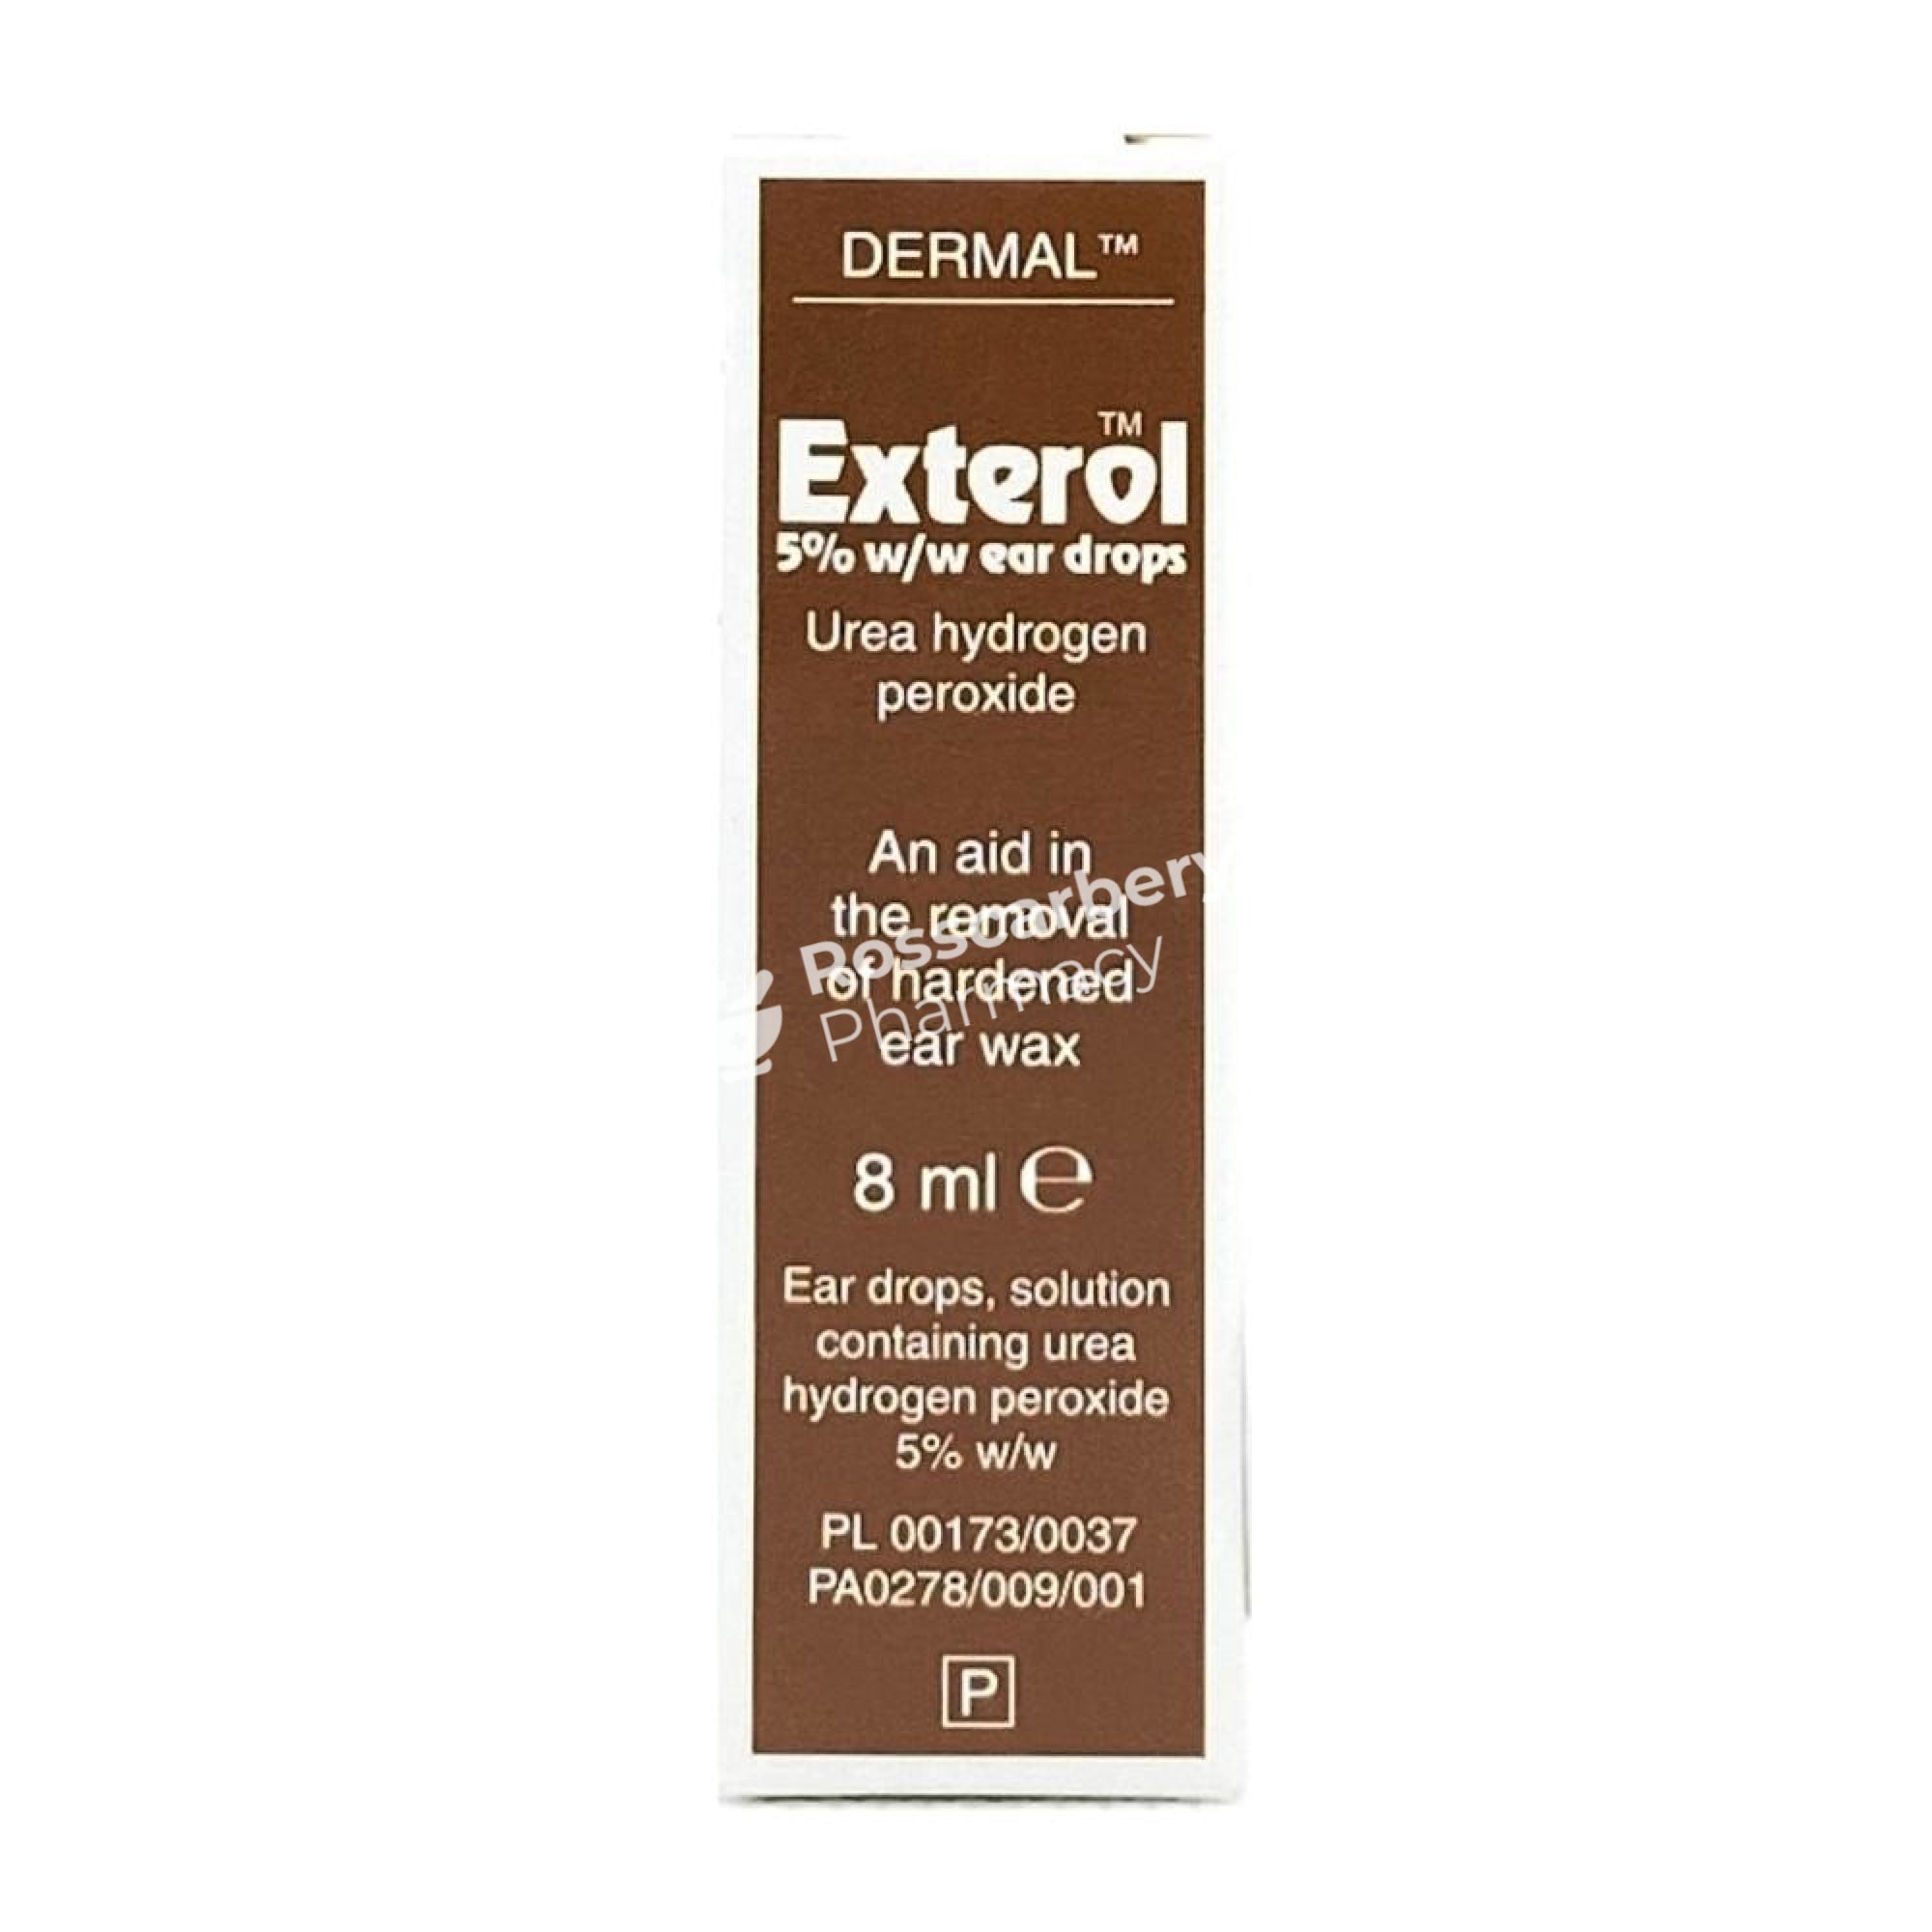 Exterol 5% W/w Ear Drops - Dermal Wax Treatment